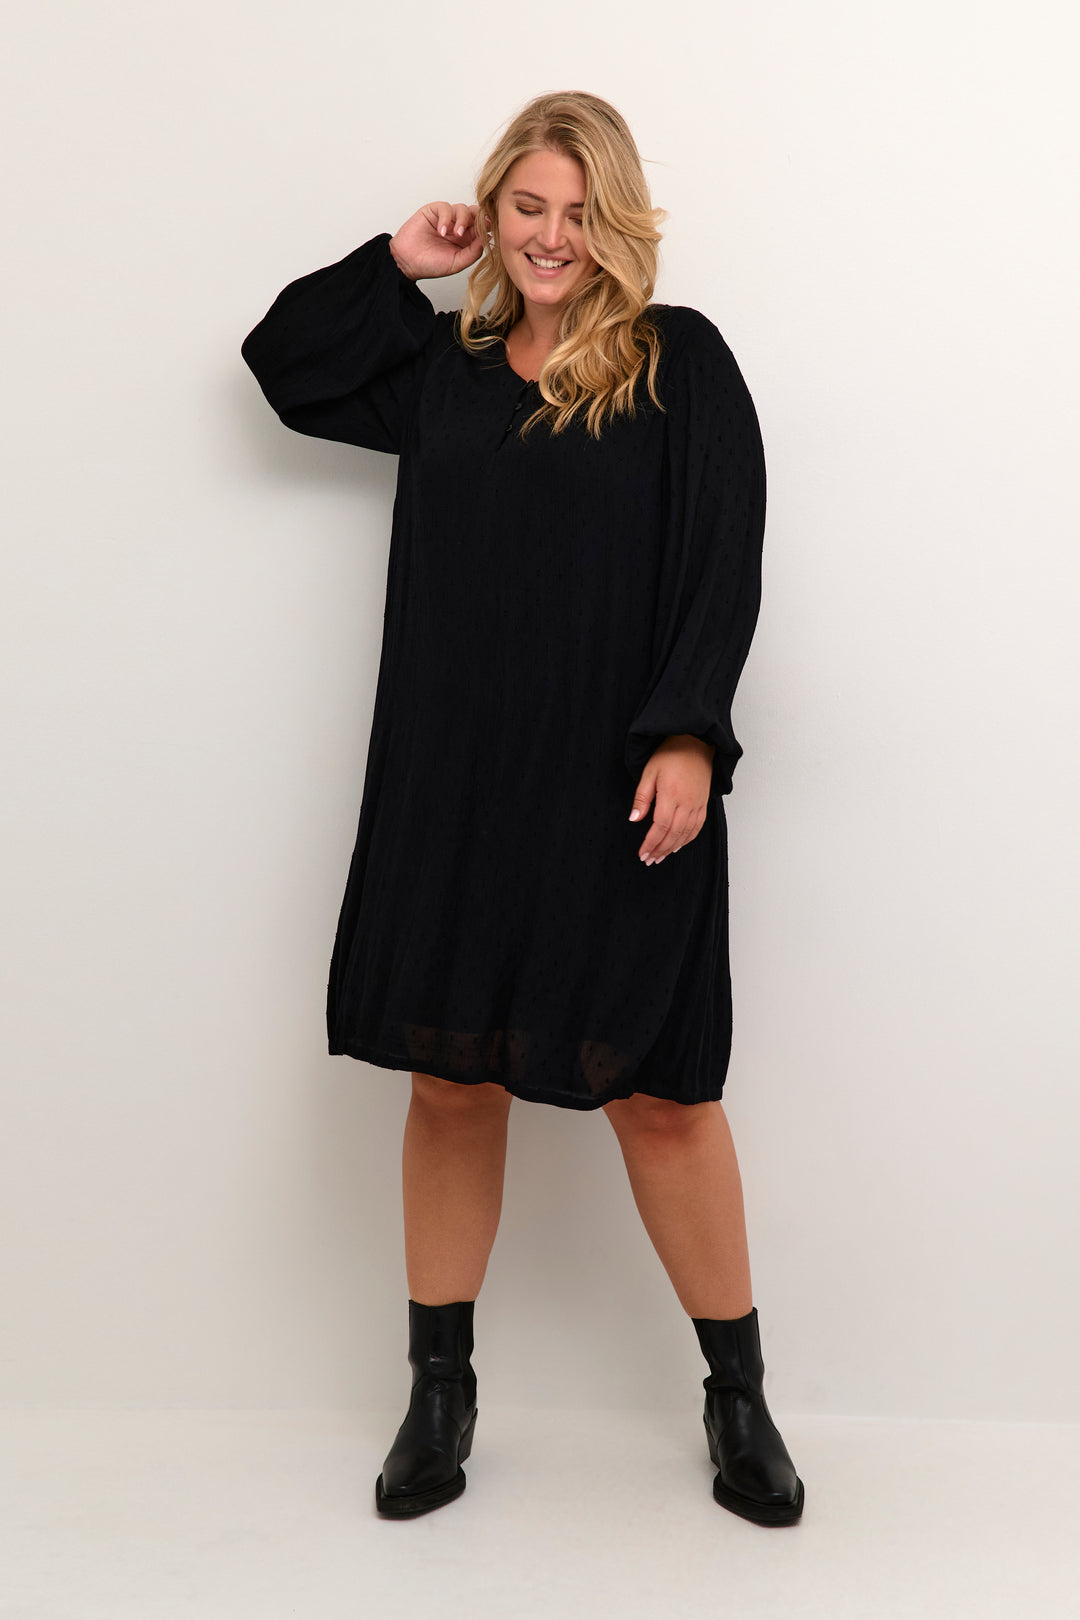 zwarte jurk met toon op toon print - kaffe curve - - grote maten - dameskleding - kledingwinkel - herent - leuven